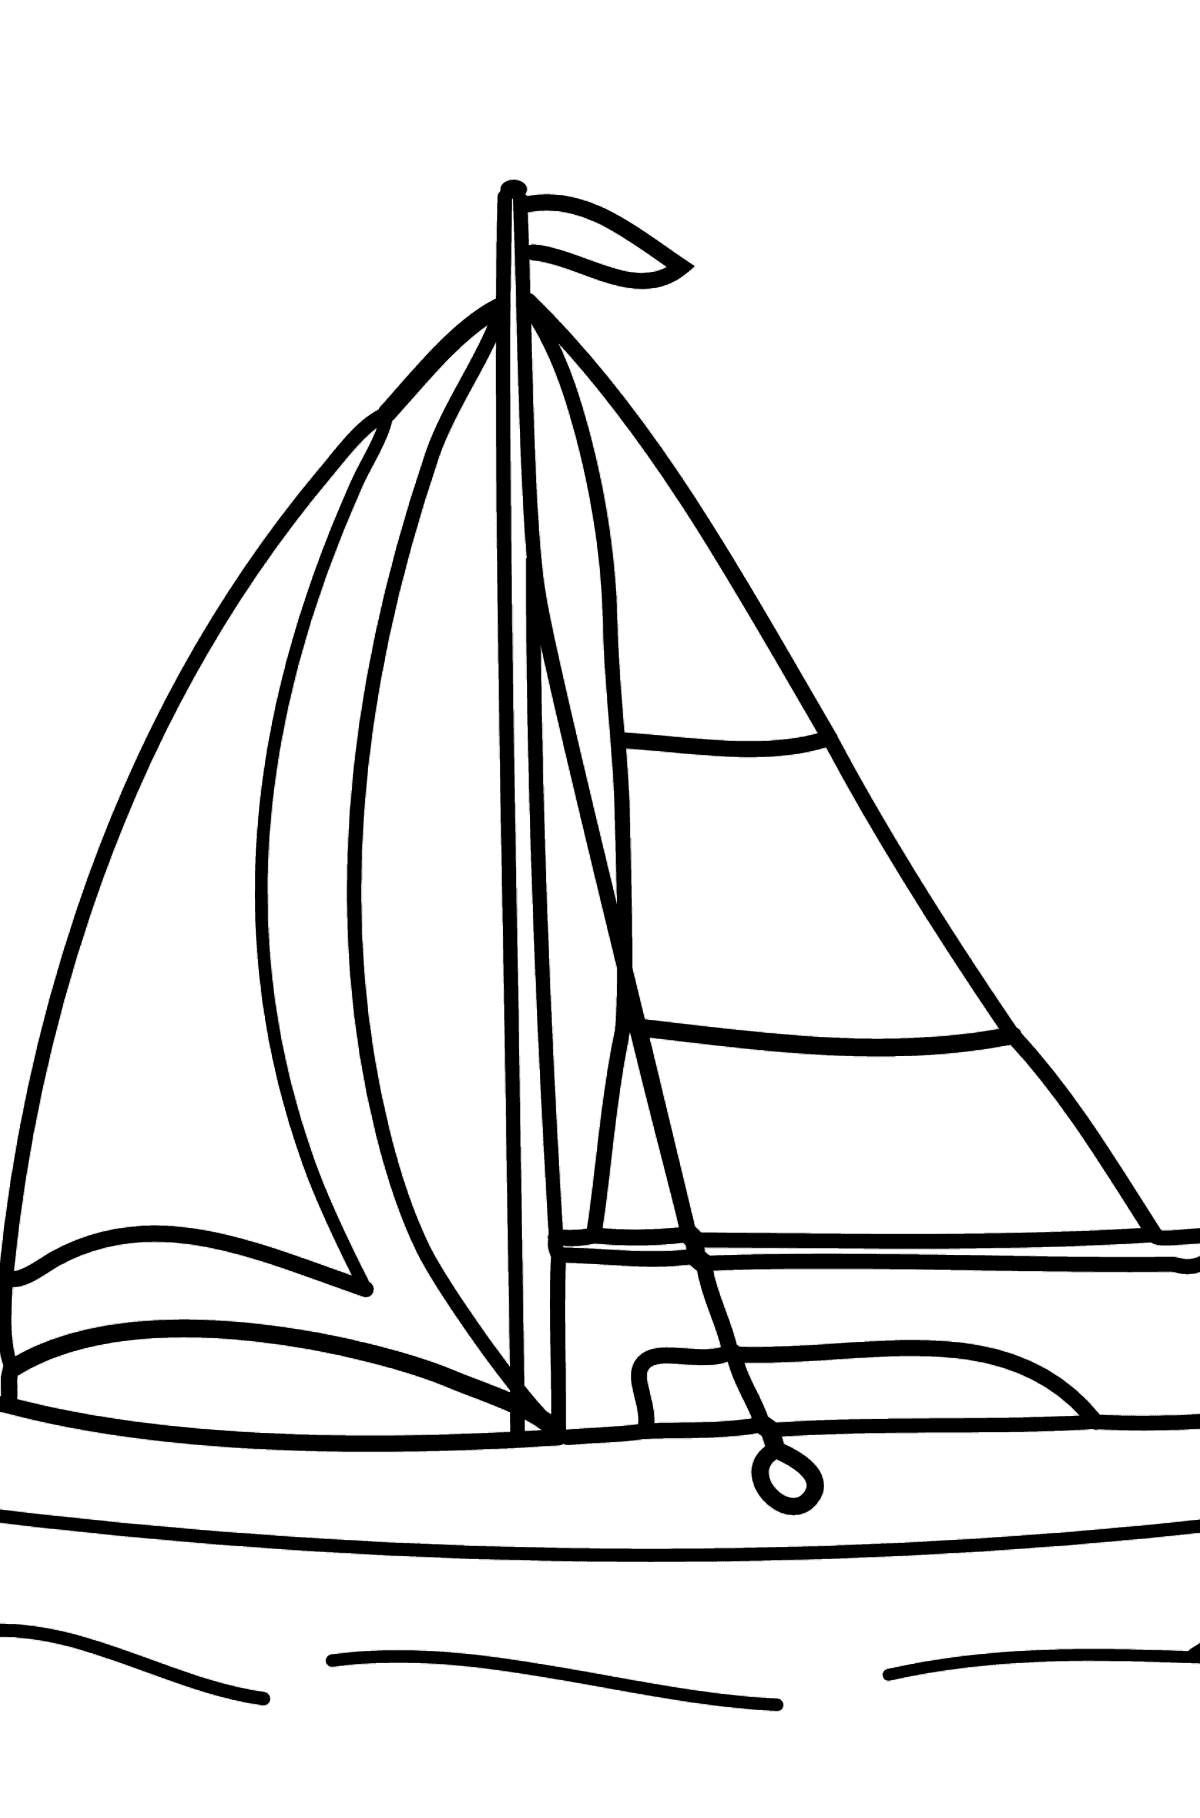 Раскраска Лодка - Картинки для Детей